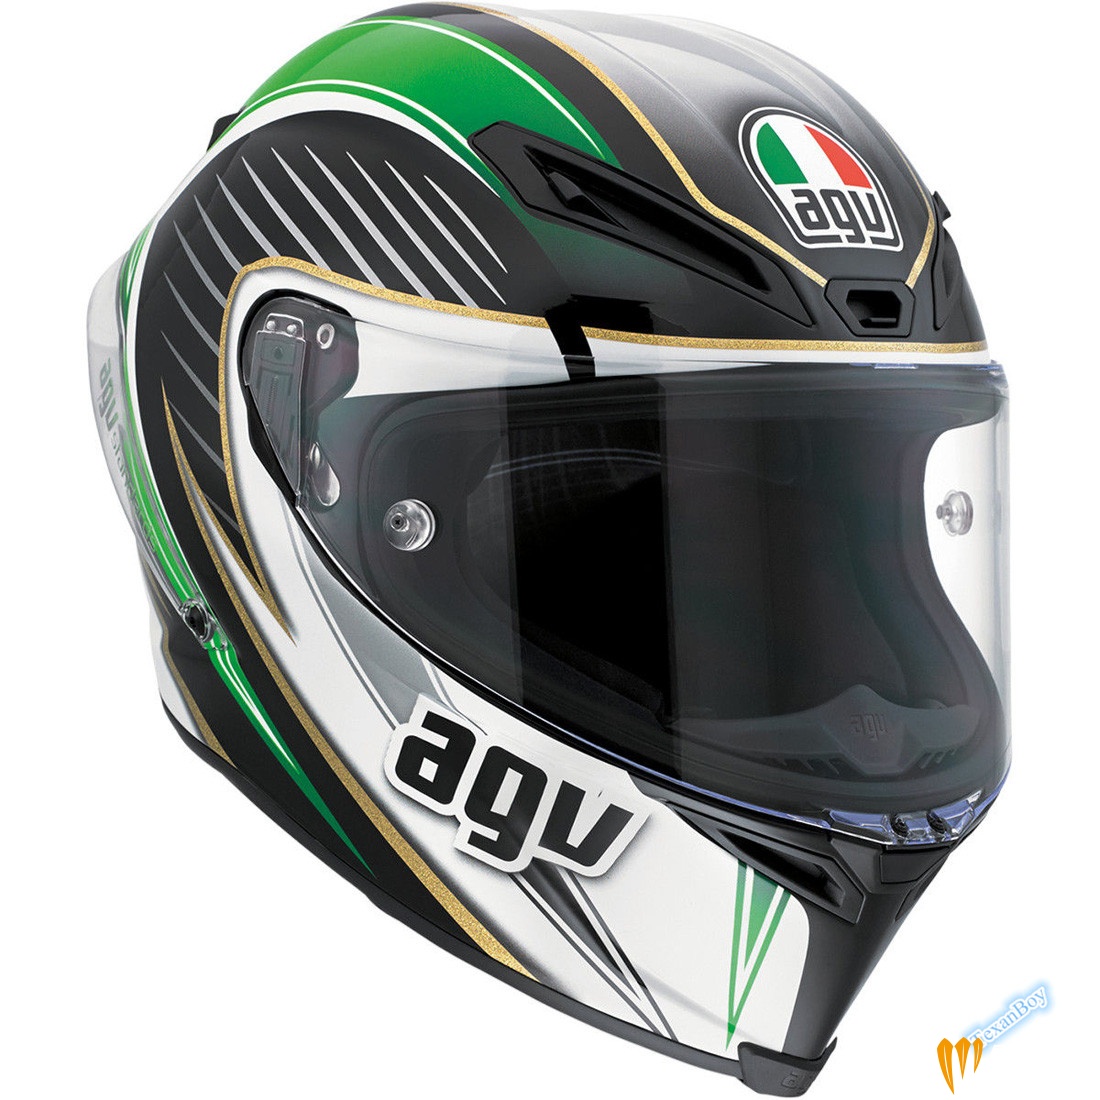 2015-agv-corsa-racetrack-helmet-mcss.jpg